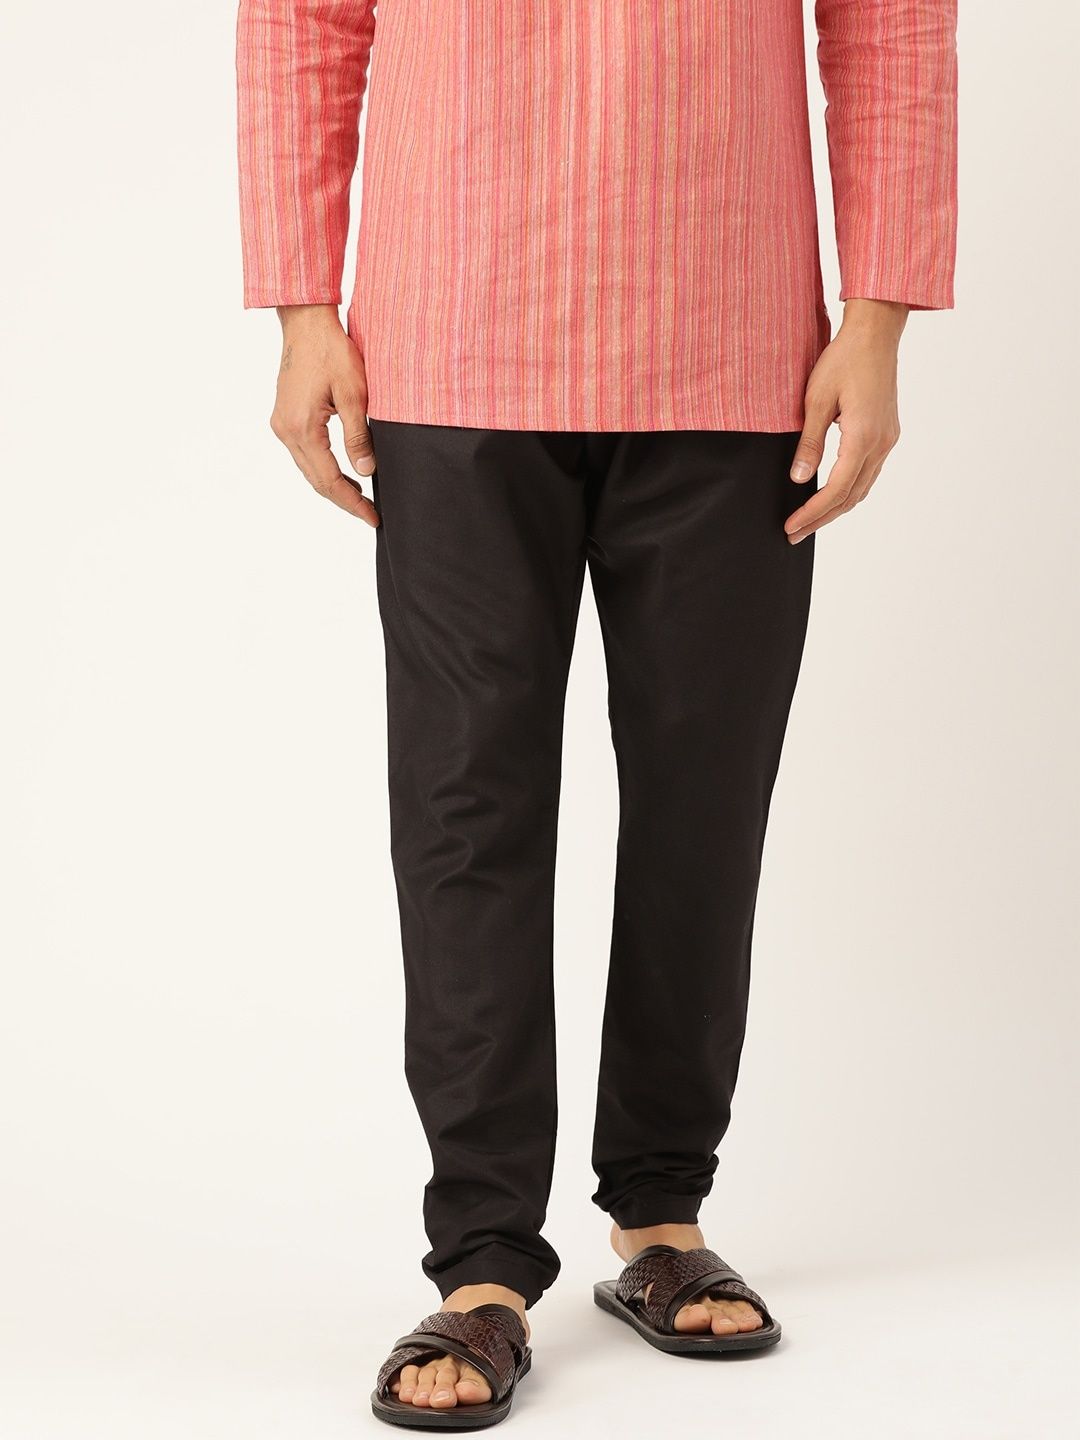 Buy Natural Dye Men Pants Khadi Cotton Pants Brown Pants Online in India   Etsy